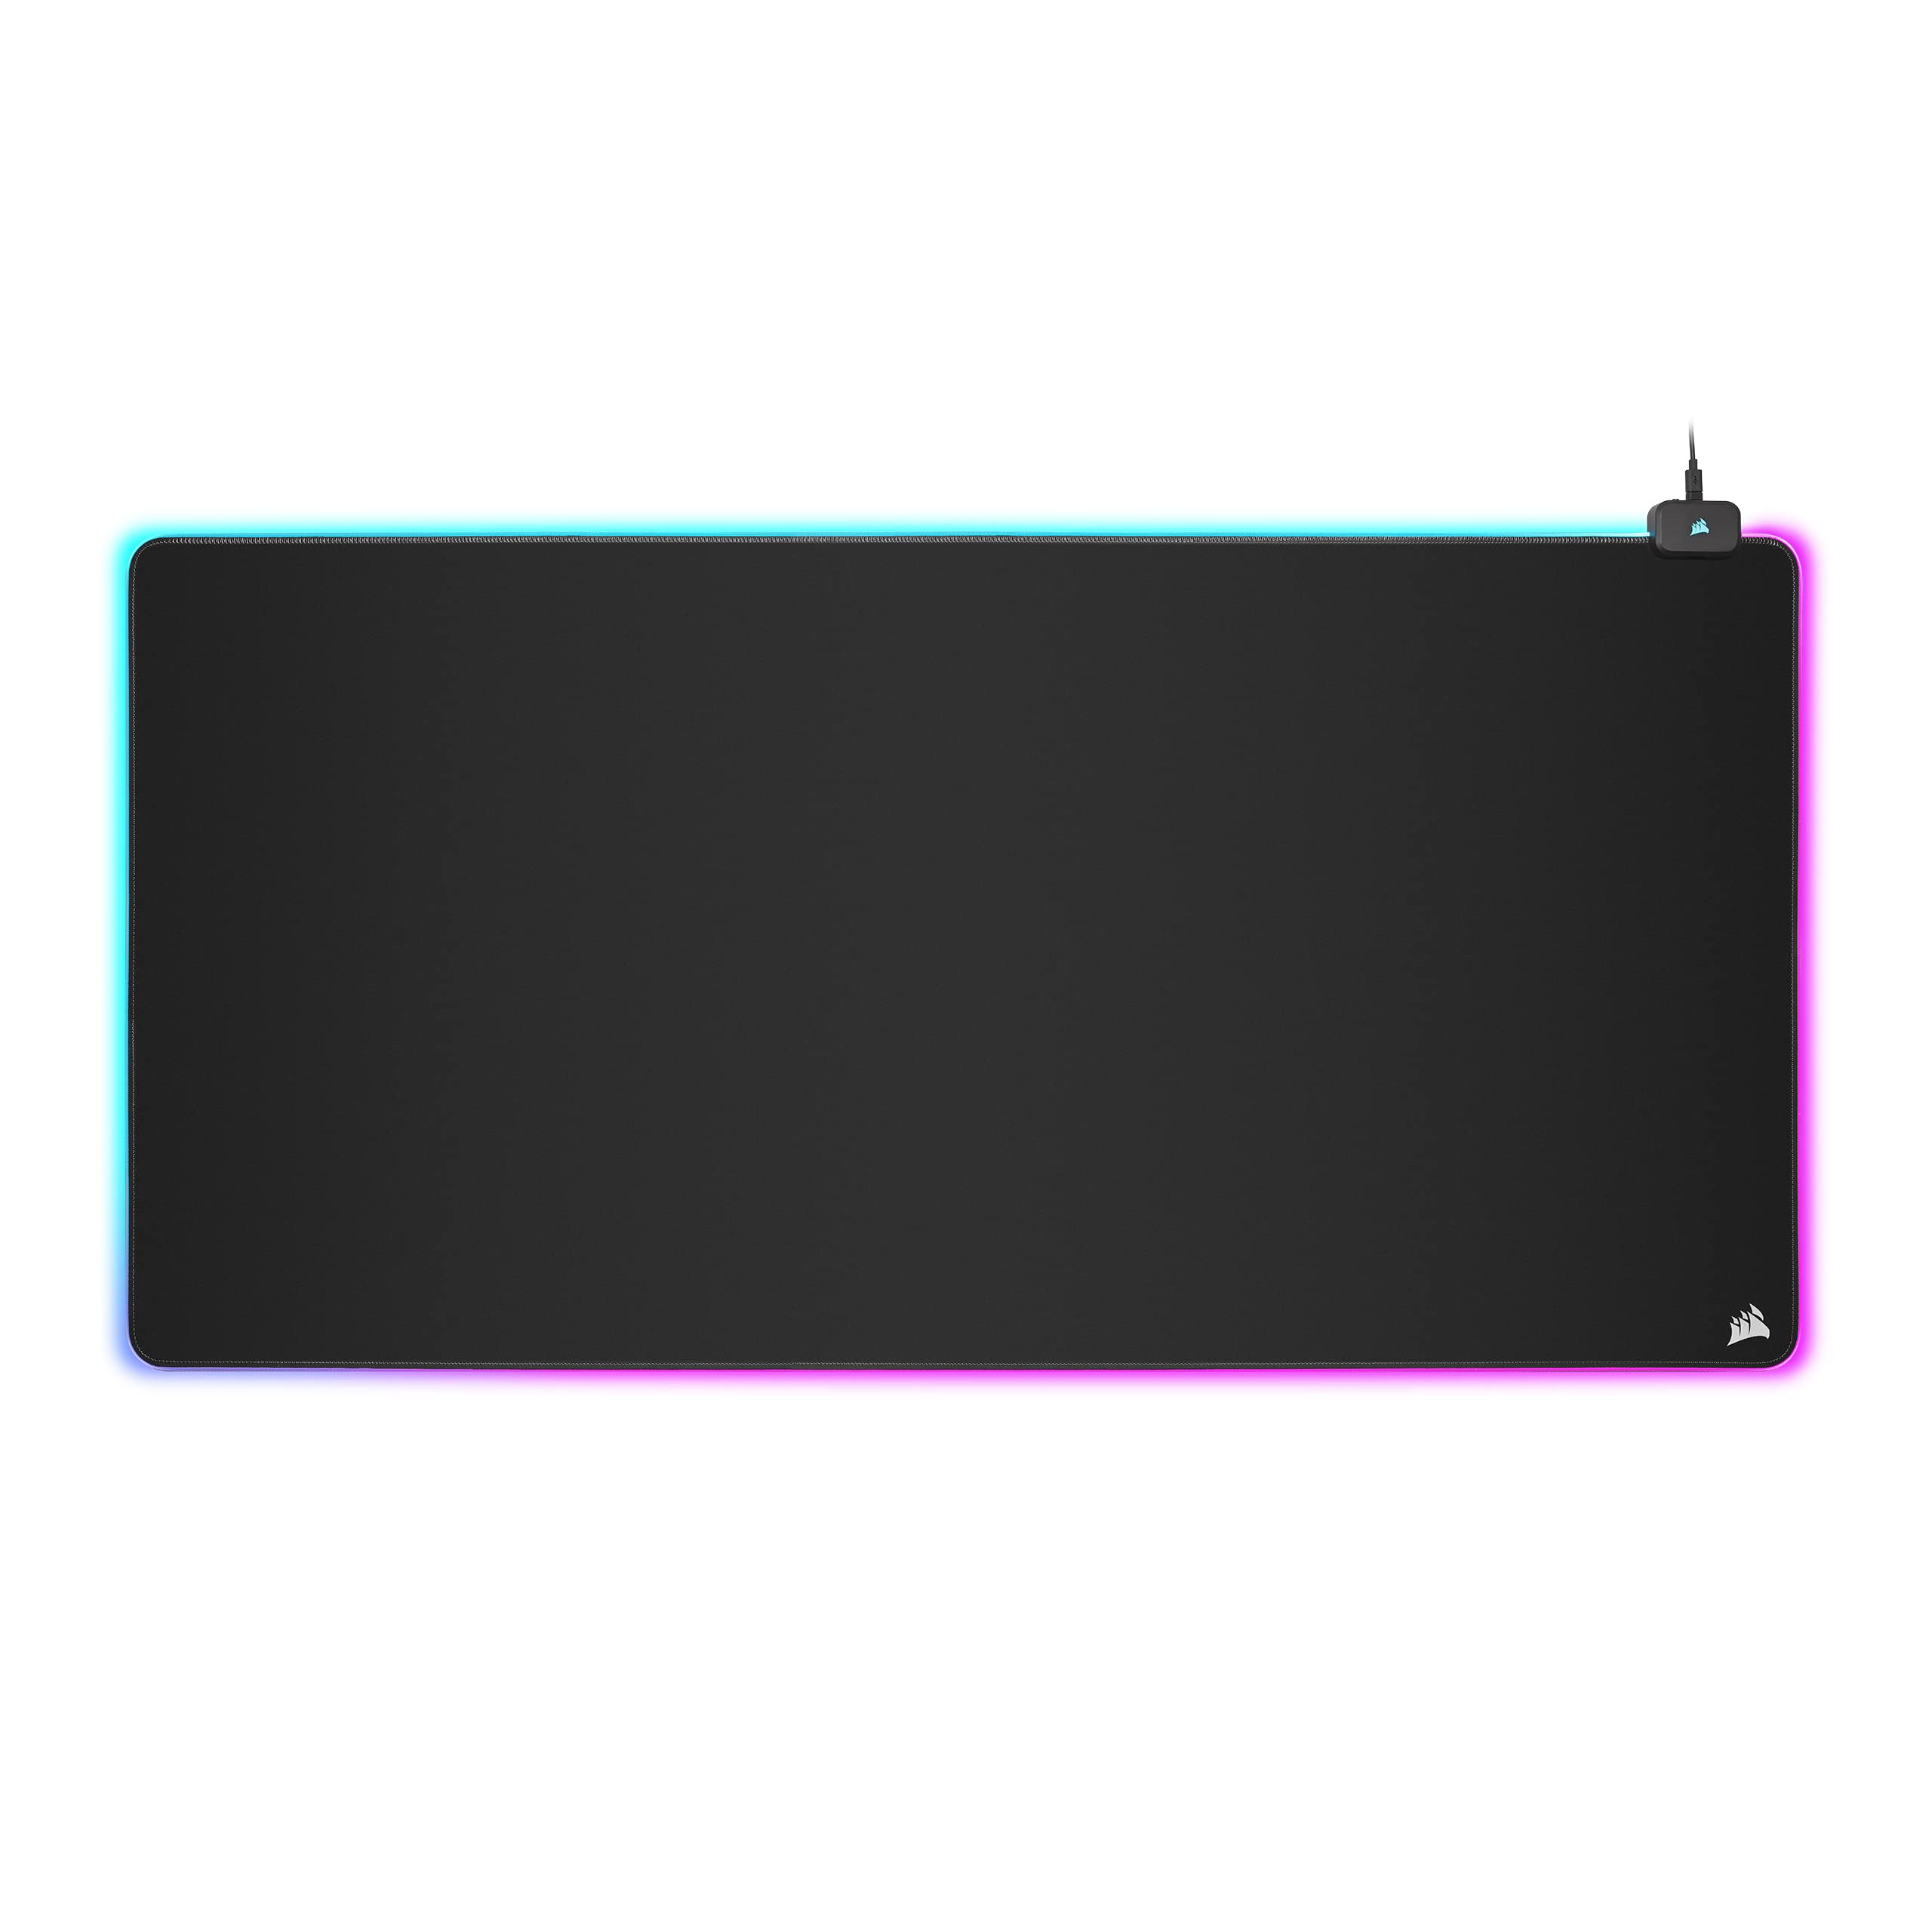 Corsair MM700 RGB Extended 3XL Cloth Gaming Mouse Pad/Desk Mat - Massive 1,220mm x 610mm (48” x 24”) Cloth Surface, 360° Three-Zone RGB Lighting, Two USB Ports - Black